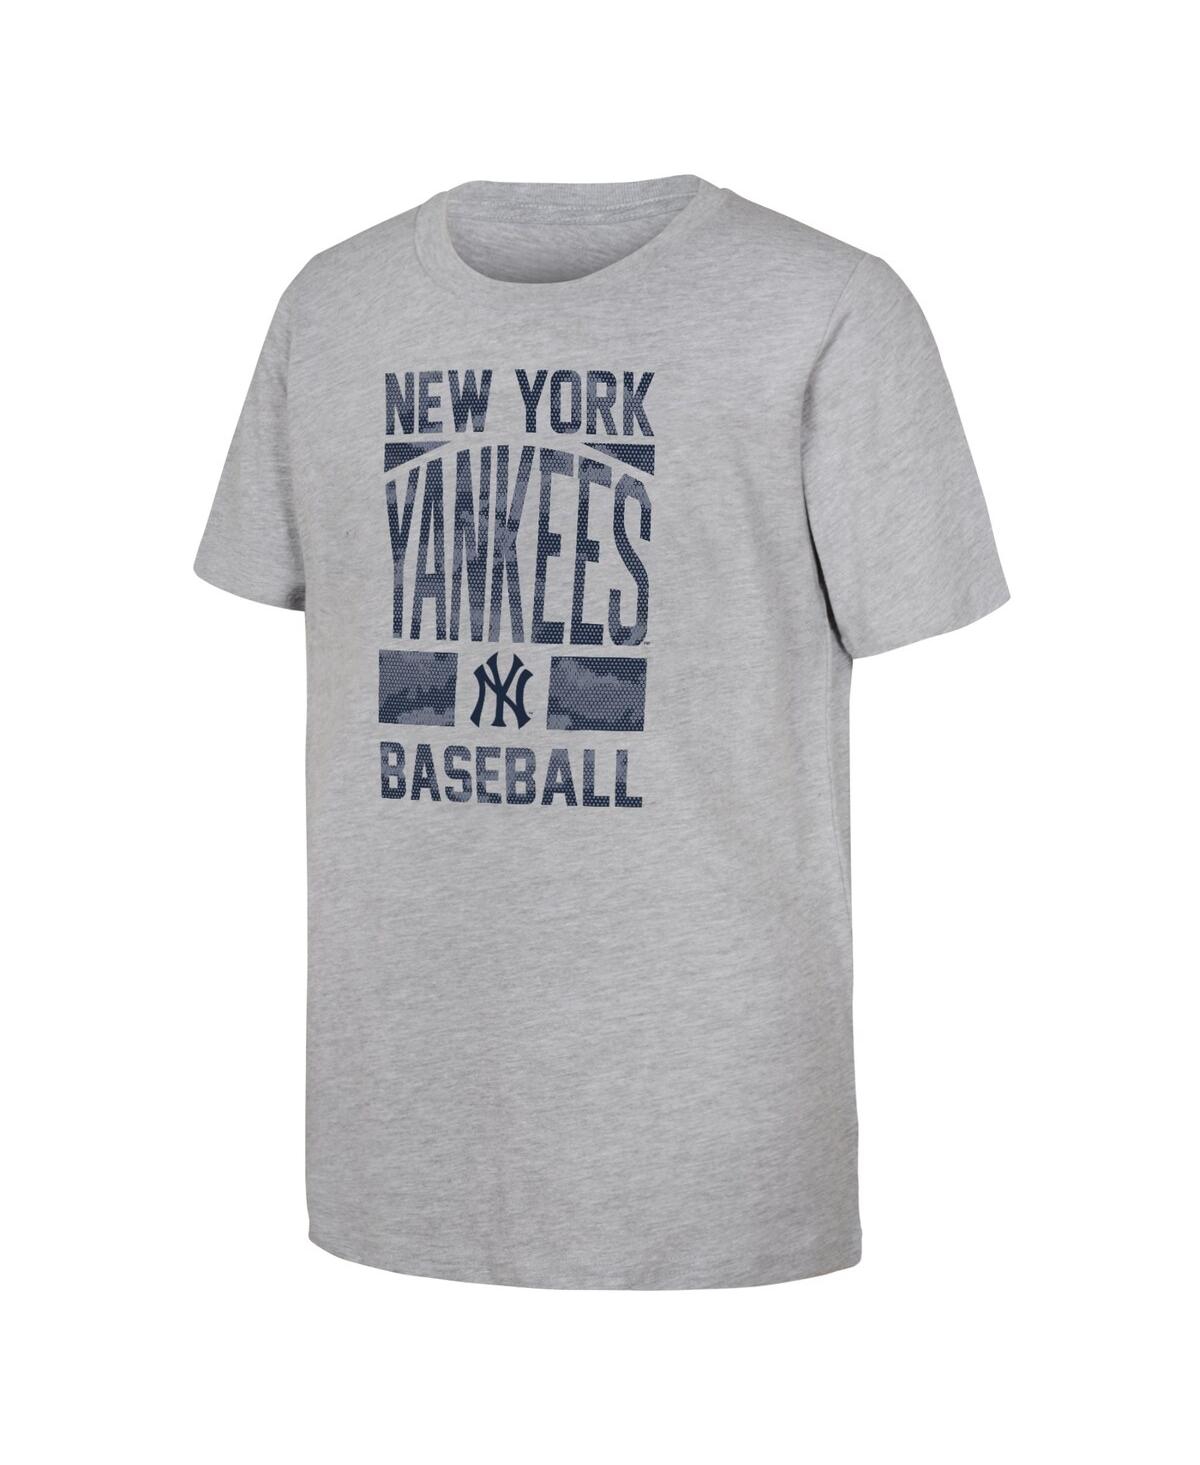 Outerstuff Kids' Big Boys  Heather Gray New York Yankees Season Ticket T-shirt